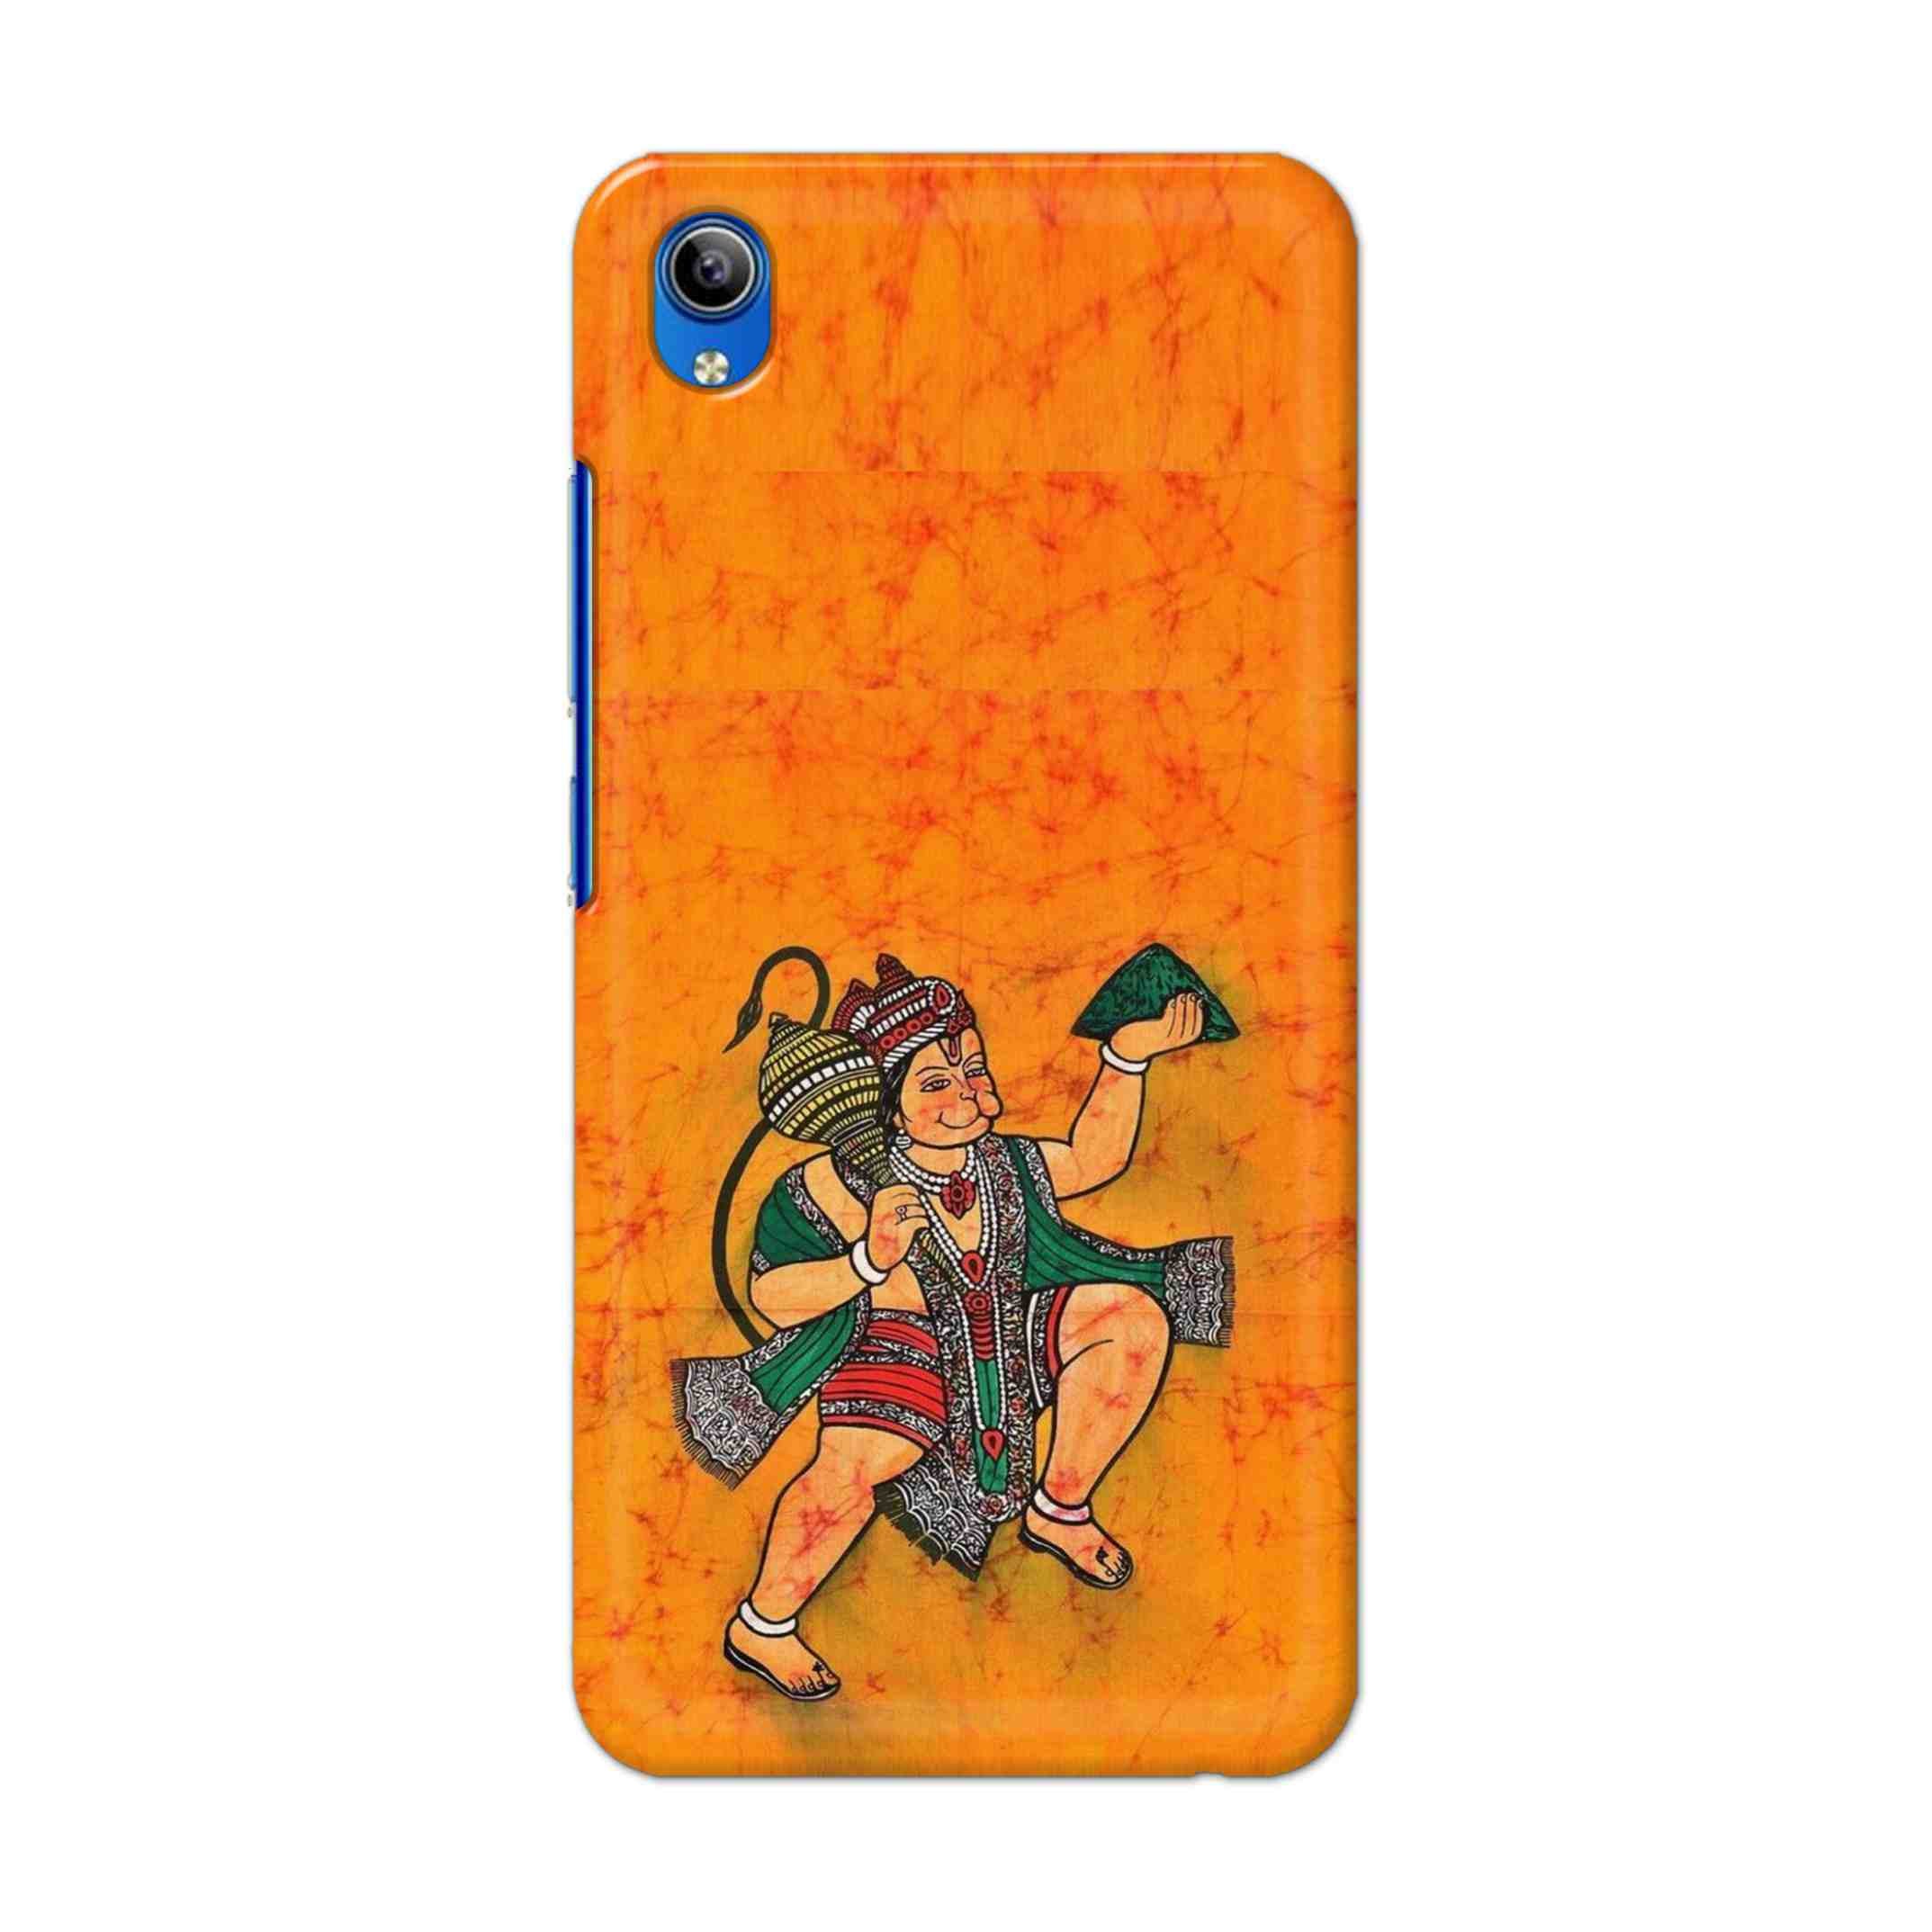 Buy Hanuman Ji Hard Back Mobile Phone Case Cover For Vivo Y91i Online